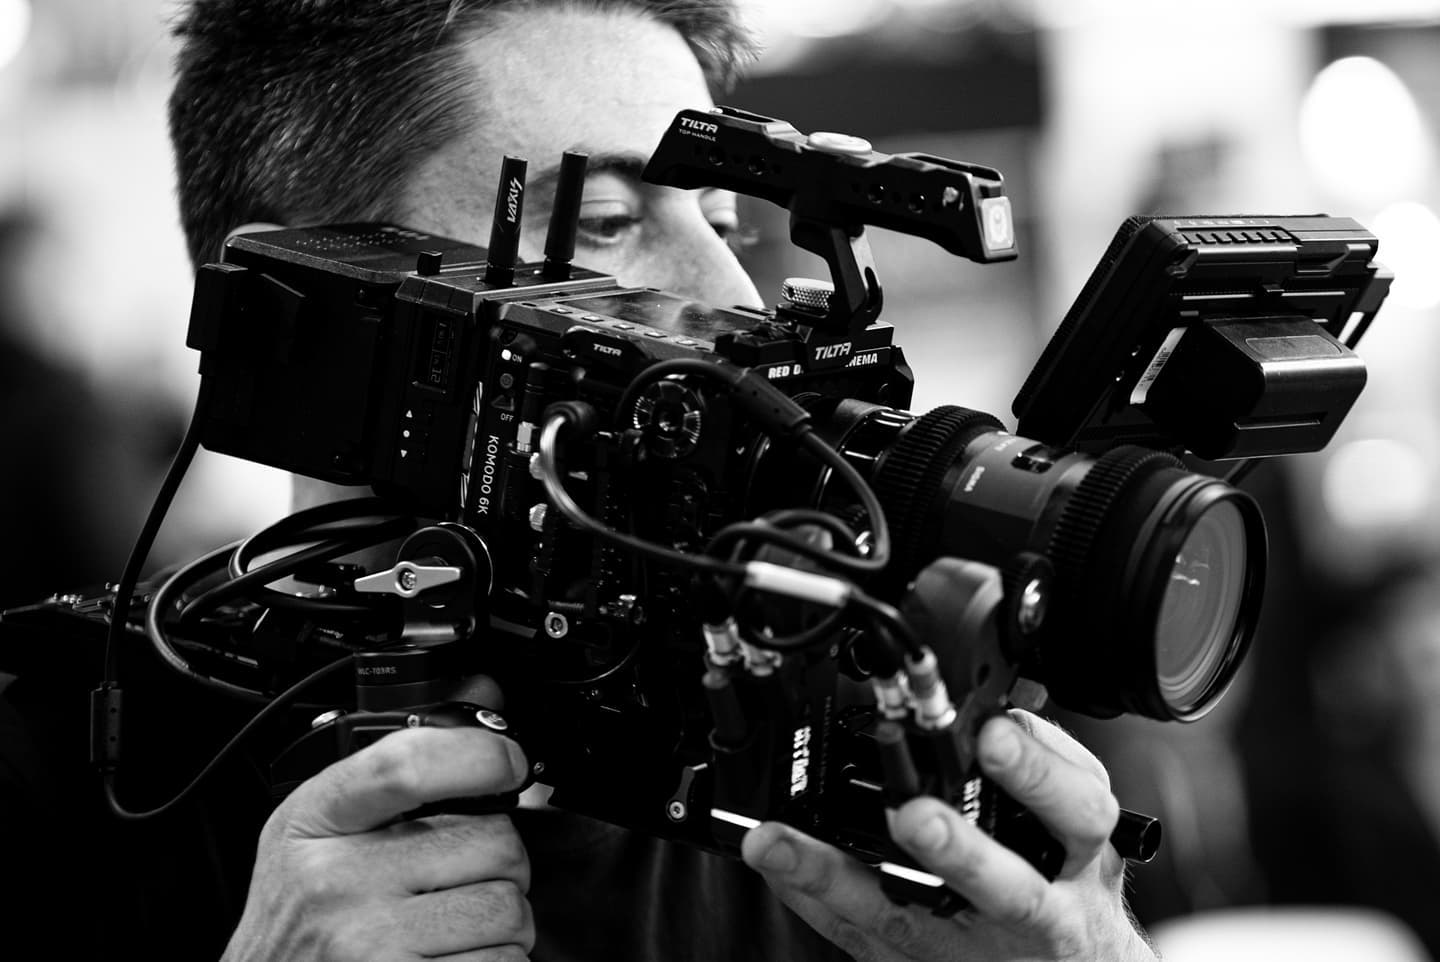 Souvenir du SIRHA 2021 à Lyon 
Notre opérateur et sa RED Komodo 

@reddigitalcinema @sirha_lyon

Photo : @maade.in

#red #redkomodo #reddigitalcinema
#reddigitalcamera #opv #sirha #sirha2021 #food #lyon #camera #movie #audiovisuel #film #ad #pub #agencevideo #videoproduction #videomaker #videocamera #sigma #tilta #6k #filmmaker